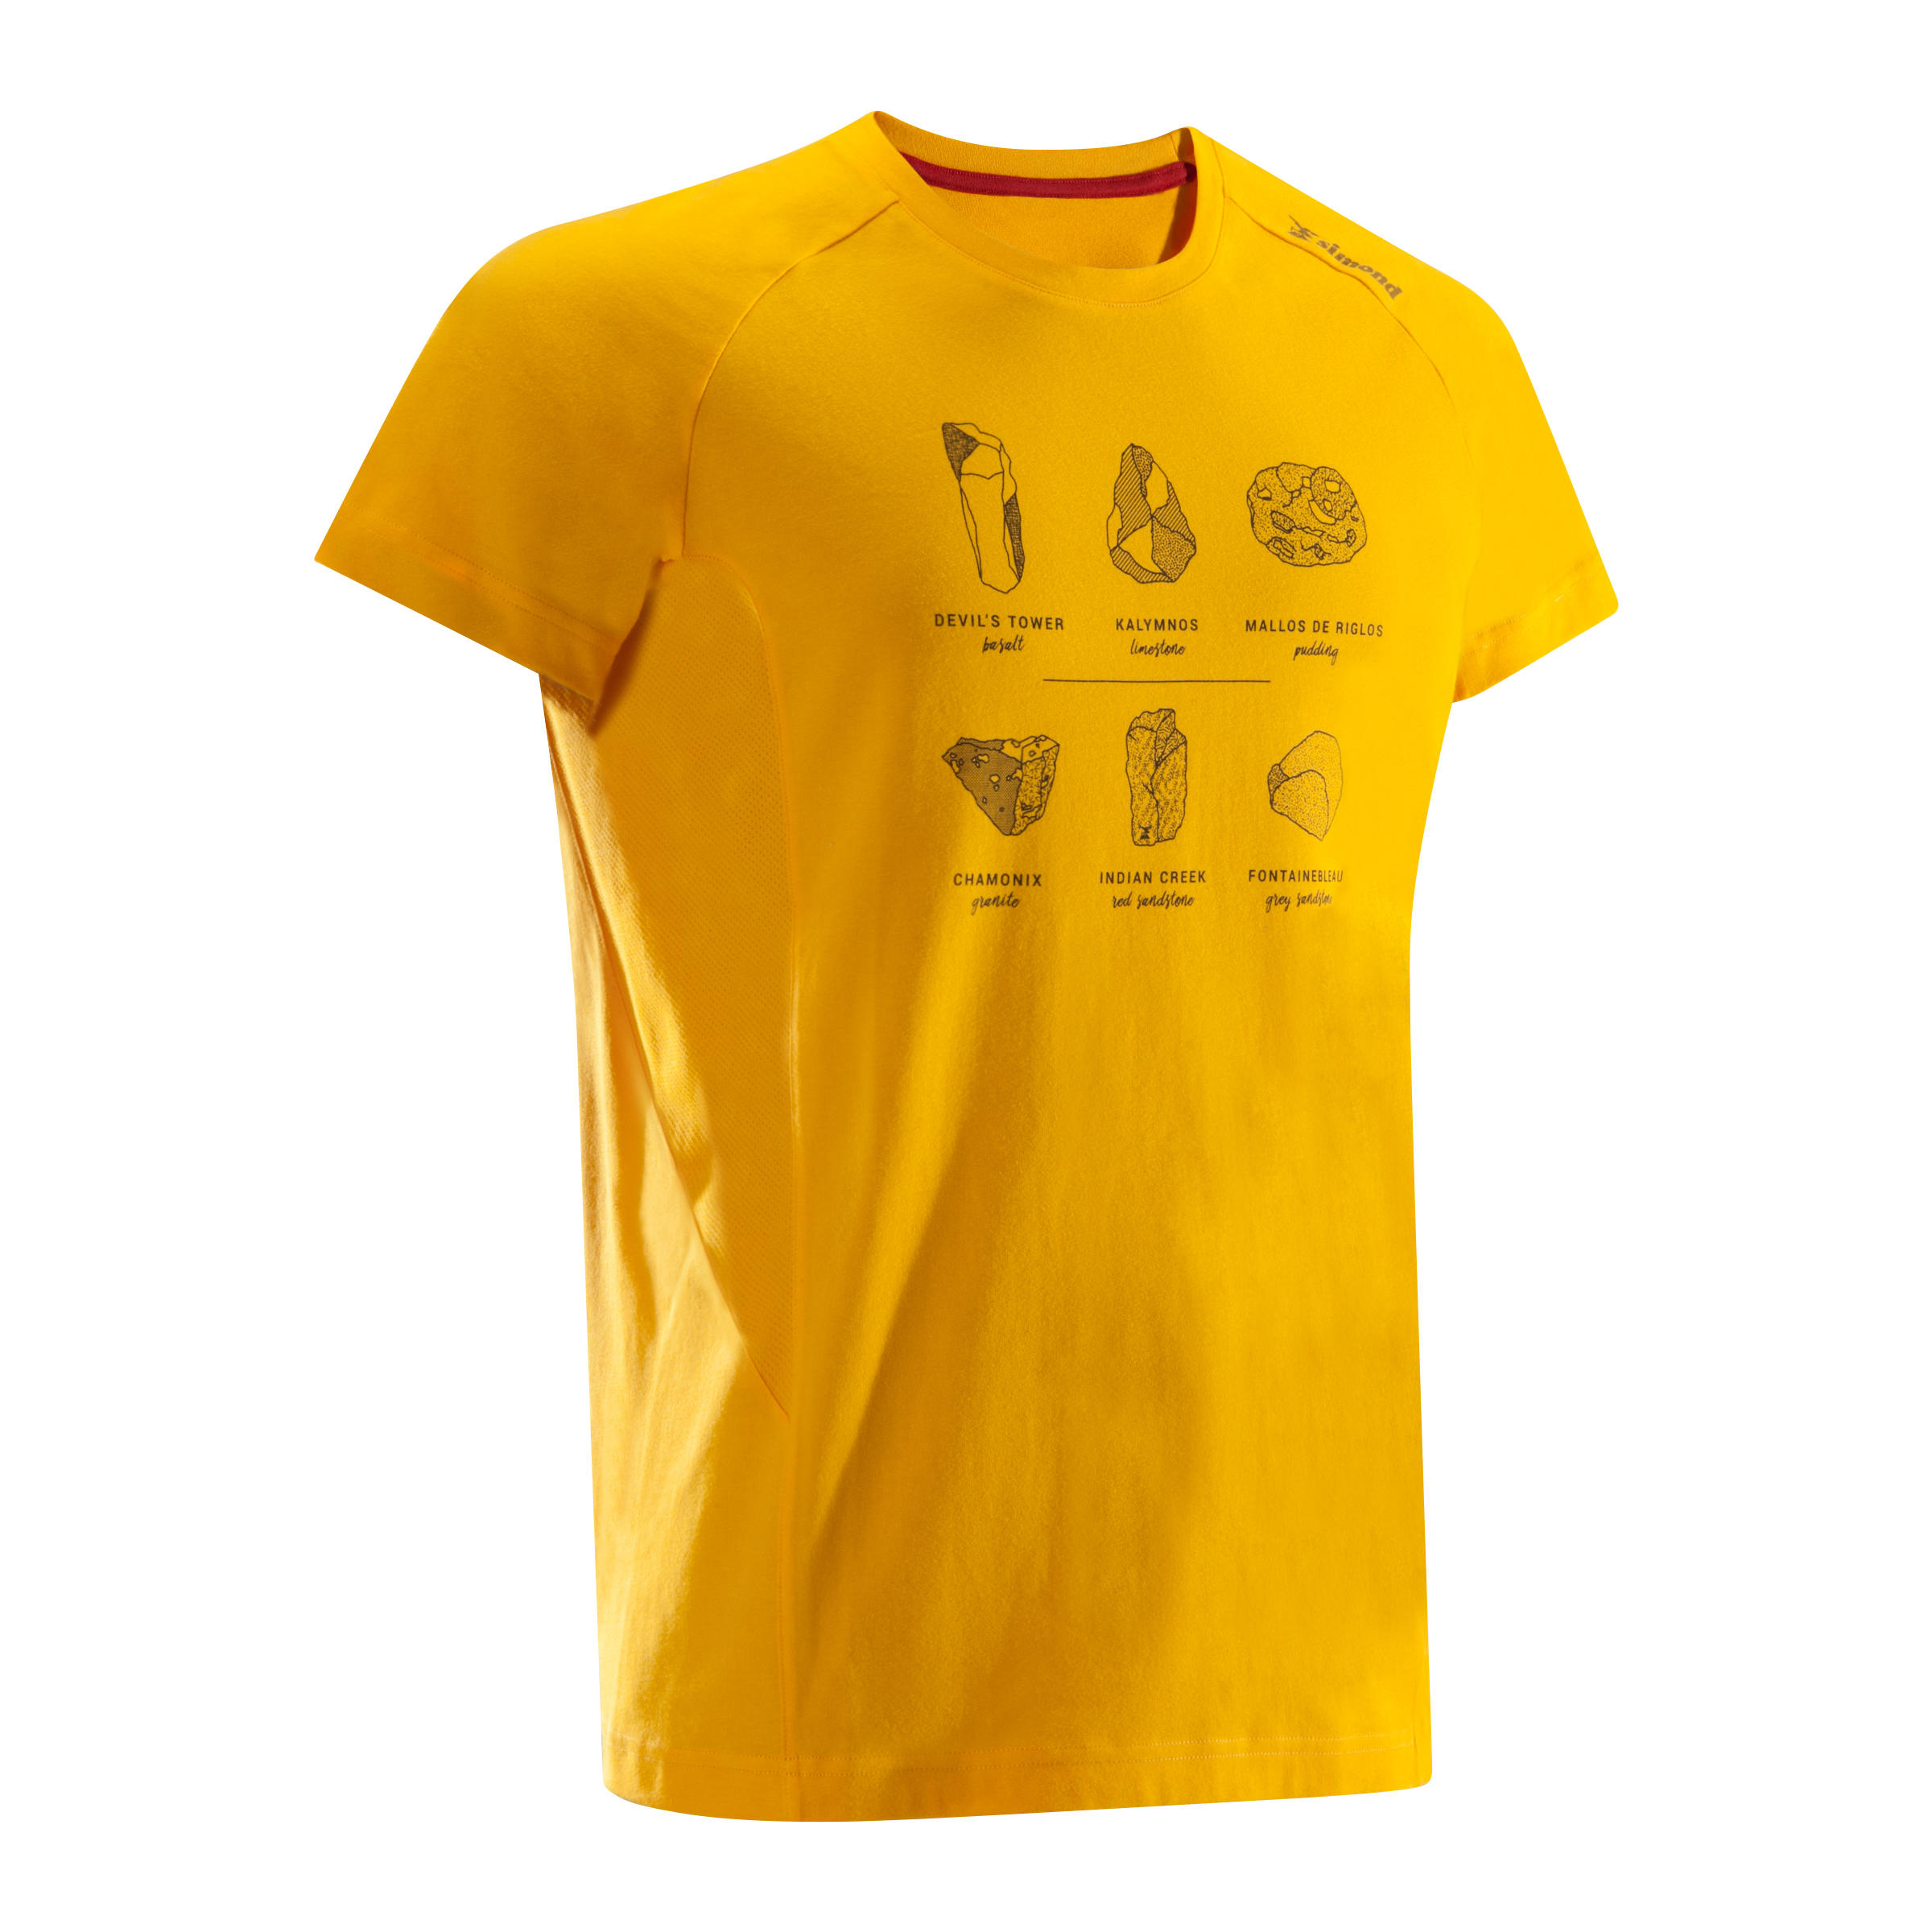 decathlon yellow t shirt